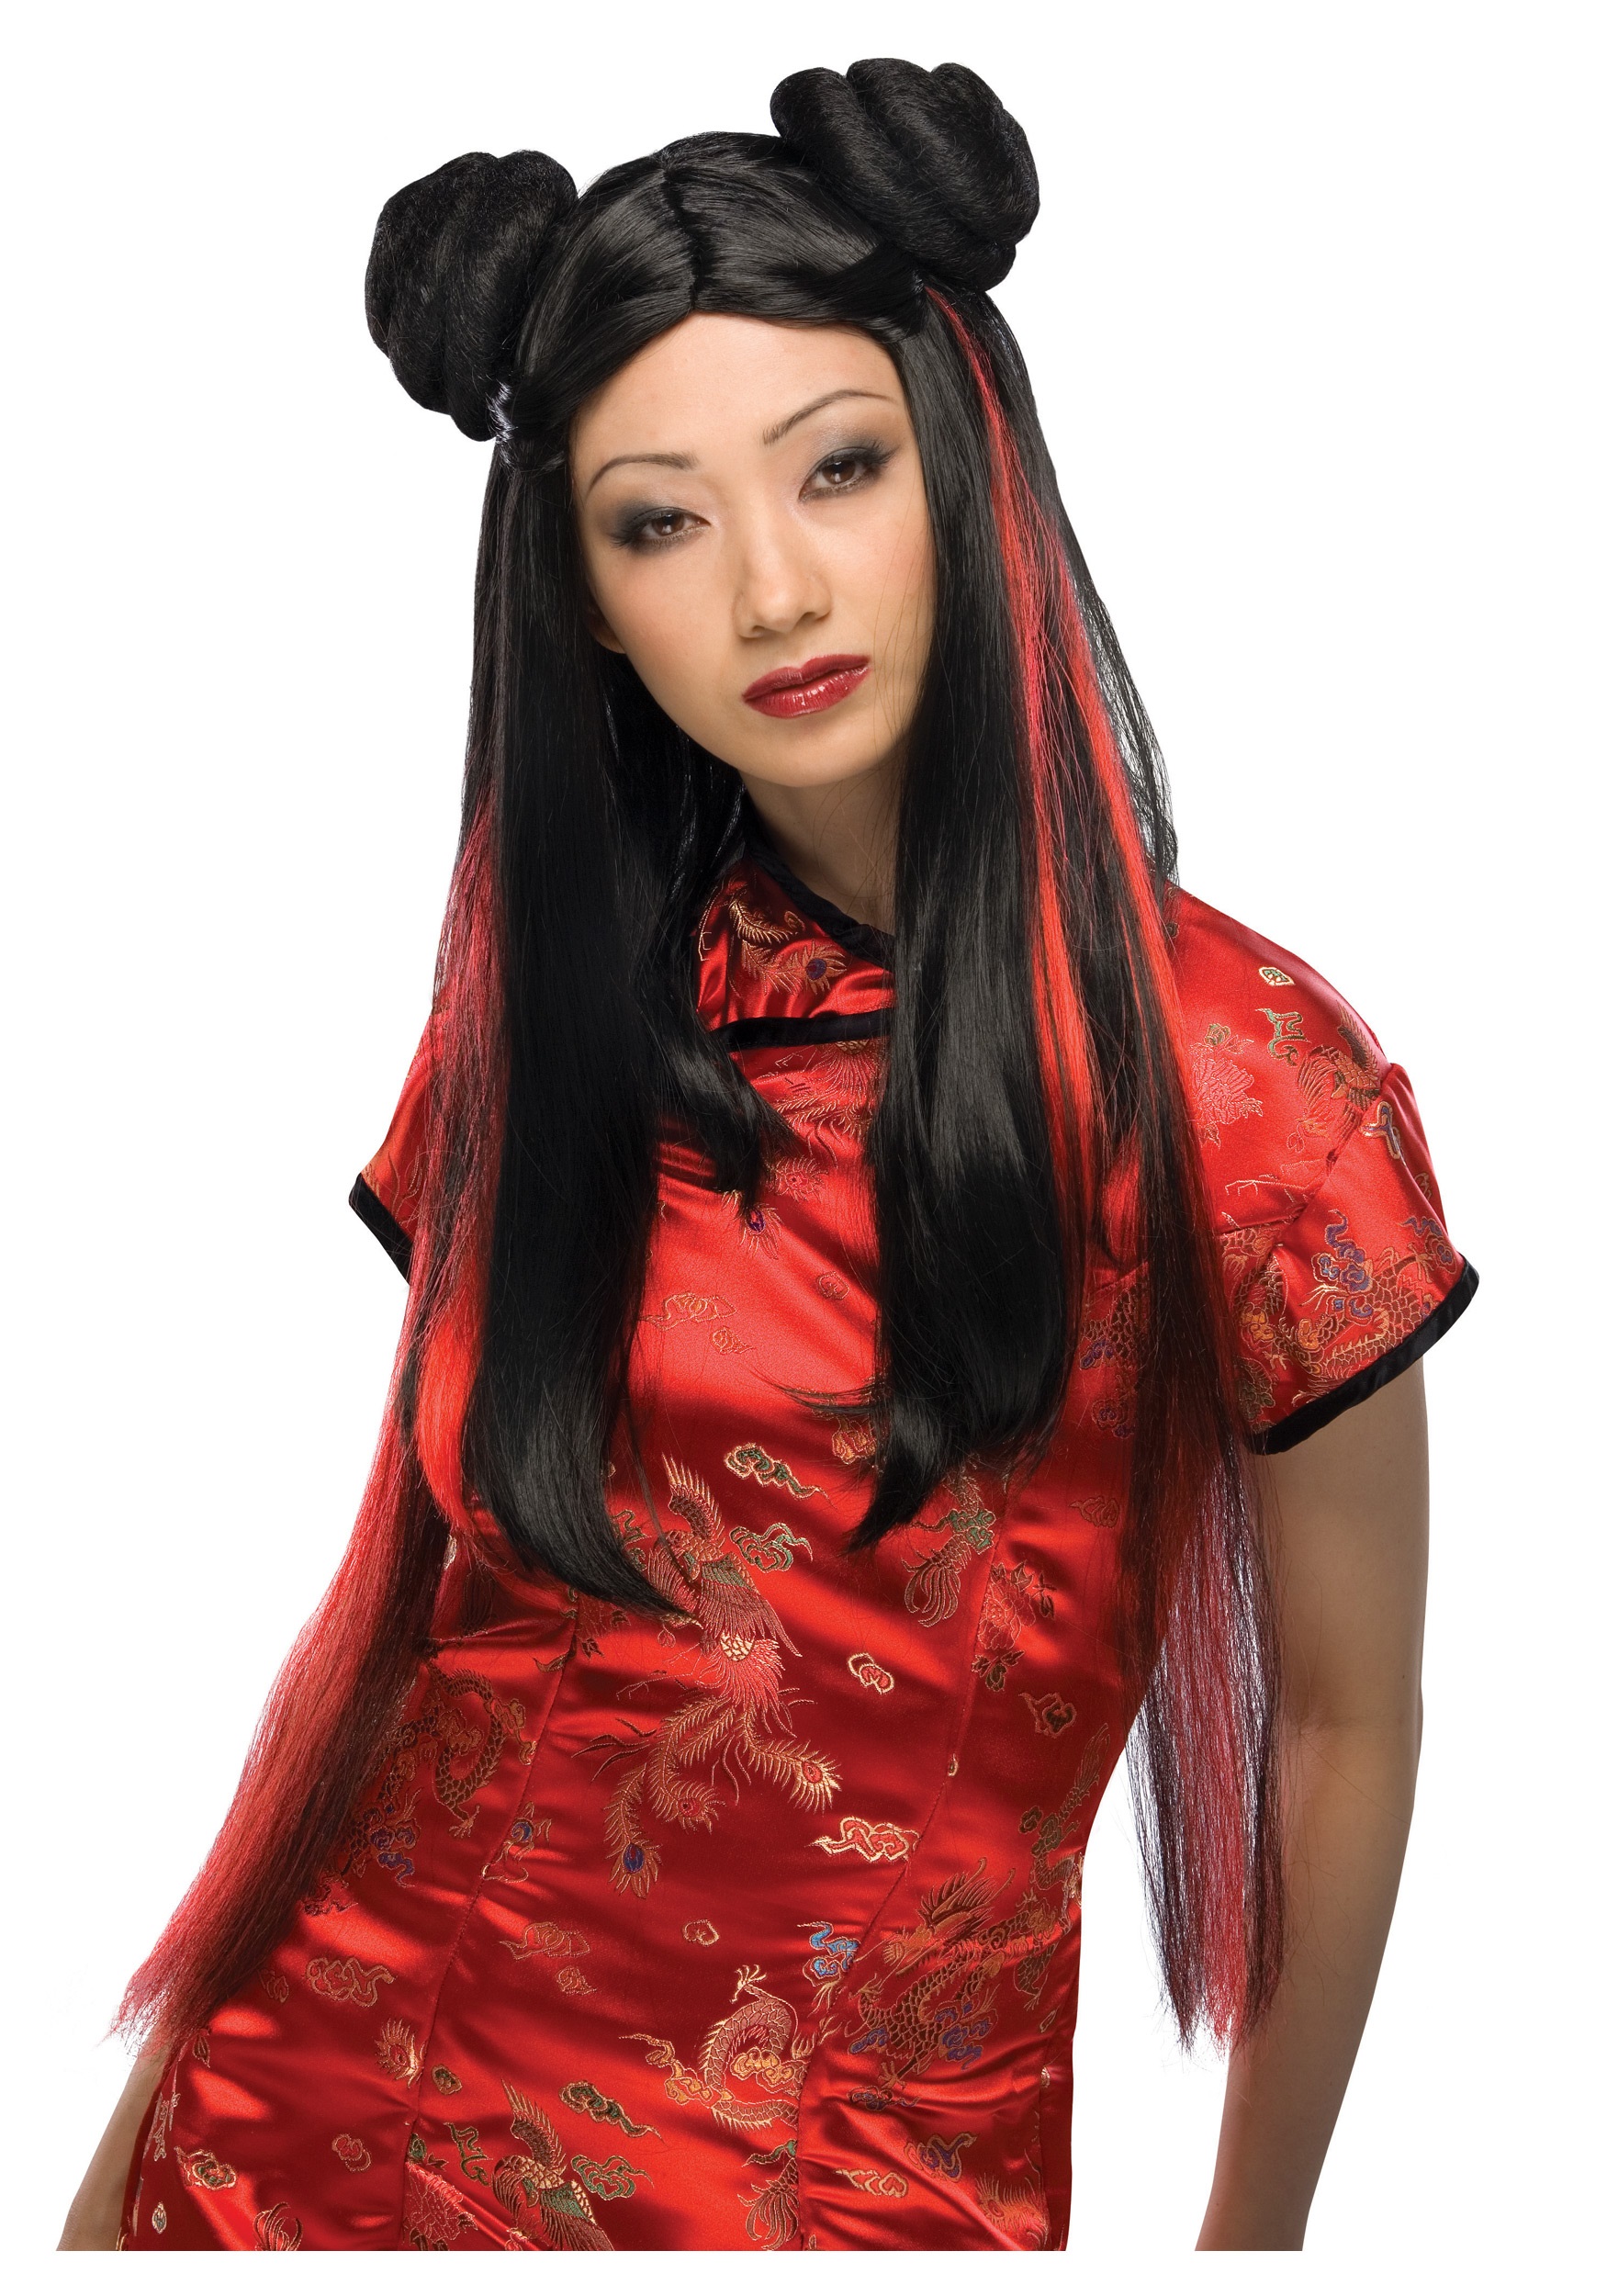 Woman Wearing Geisha Girl Outfit